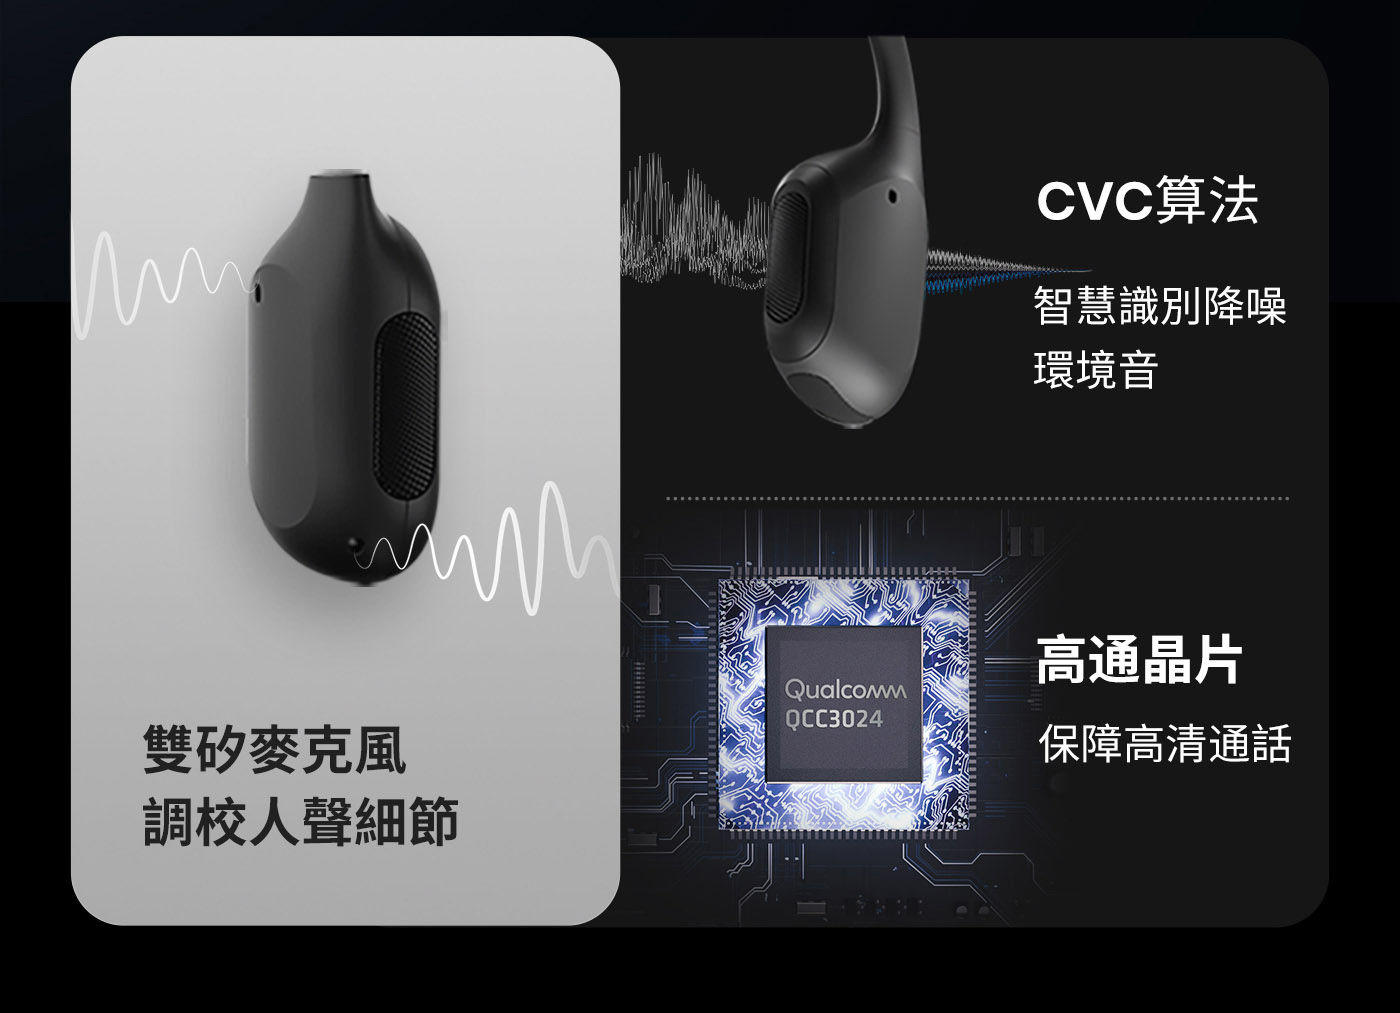 SHOKZ OPENRUN PRO S810 骨傳導藍牙運動耳機雙矽麥克風調教人聲細節，CVC算法智慧識別降噪環境音